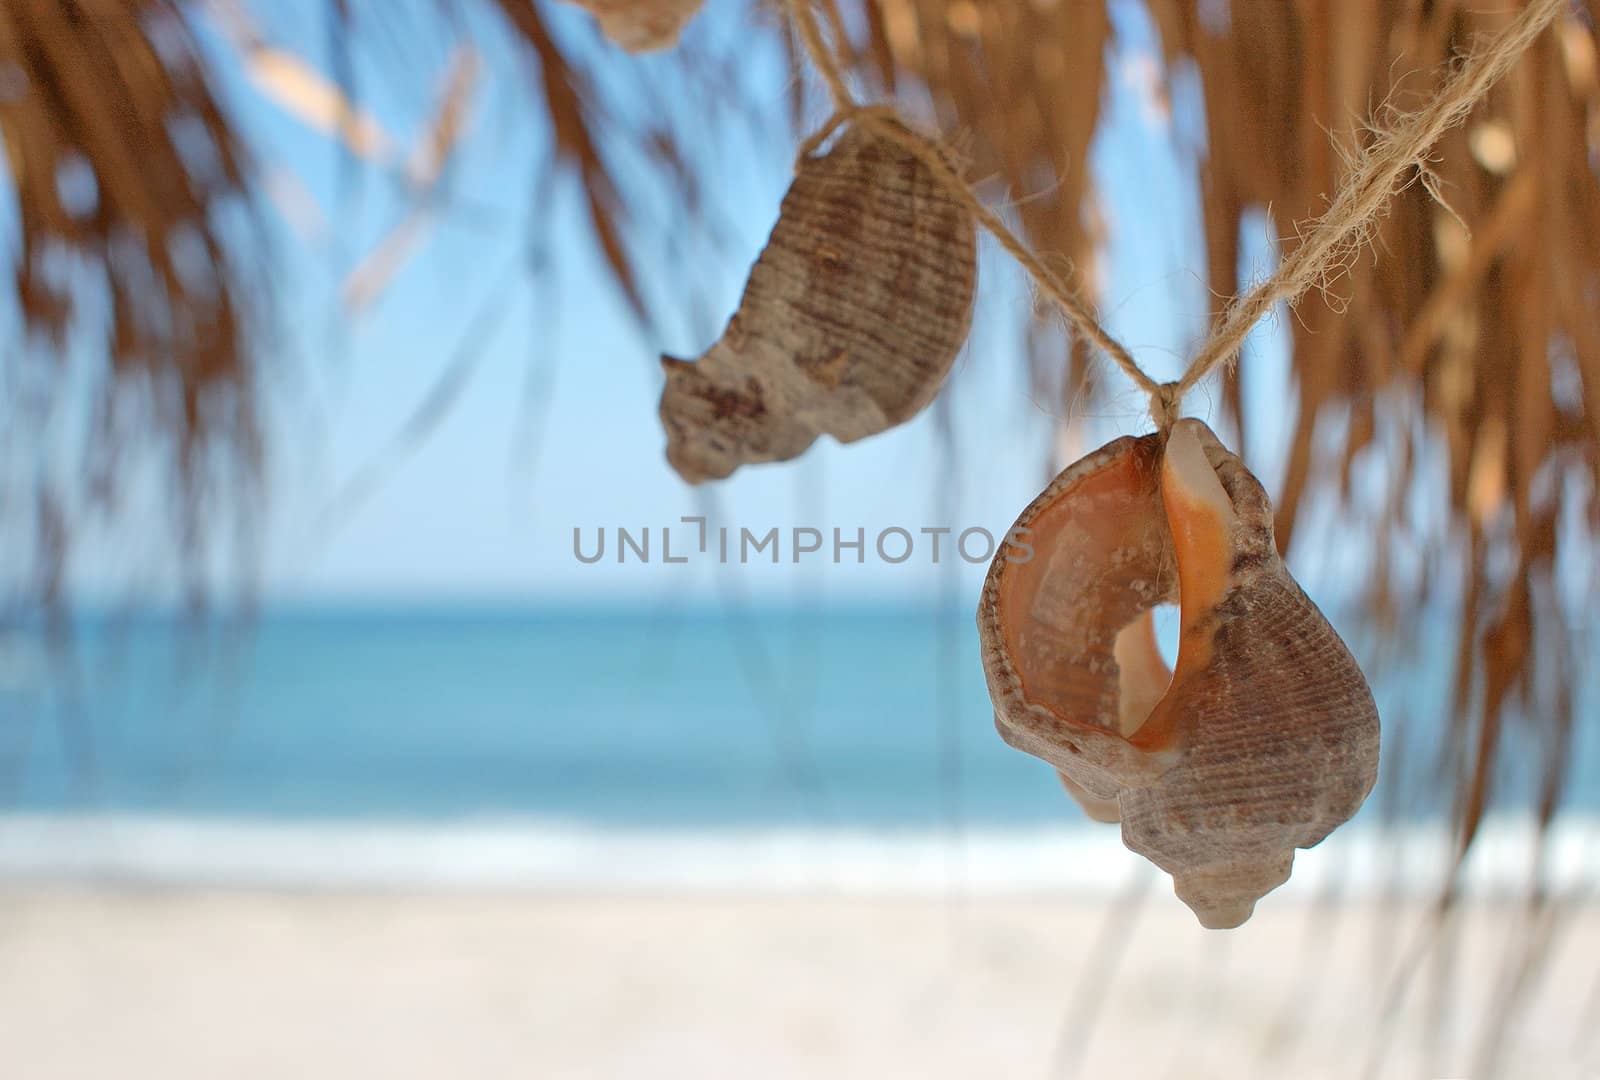 seashells on beach